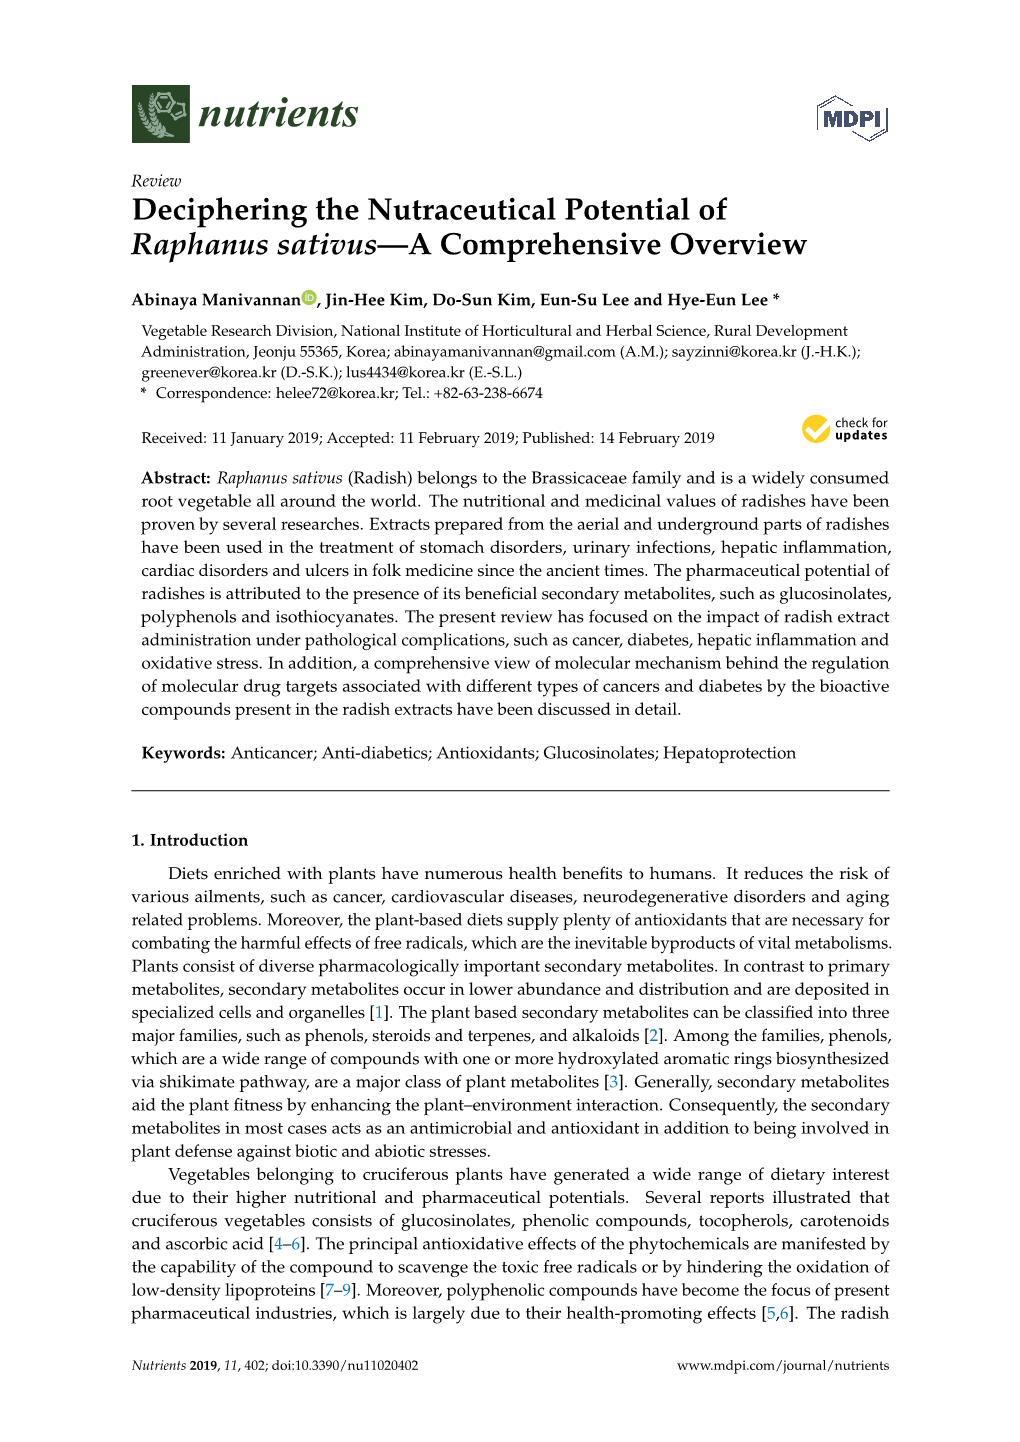 Deciphering the Nutraceutical Potential of Raphanus Sativus—A Comprehensive Overview